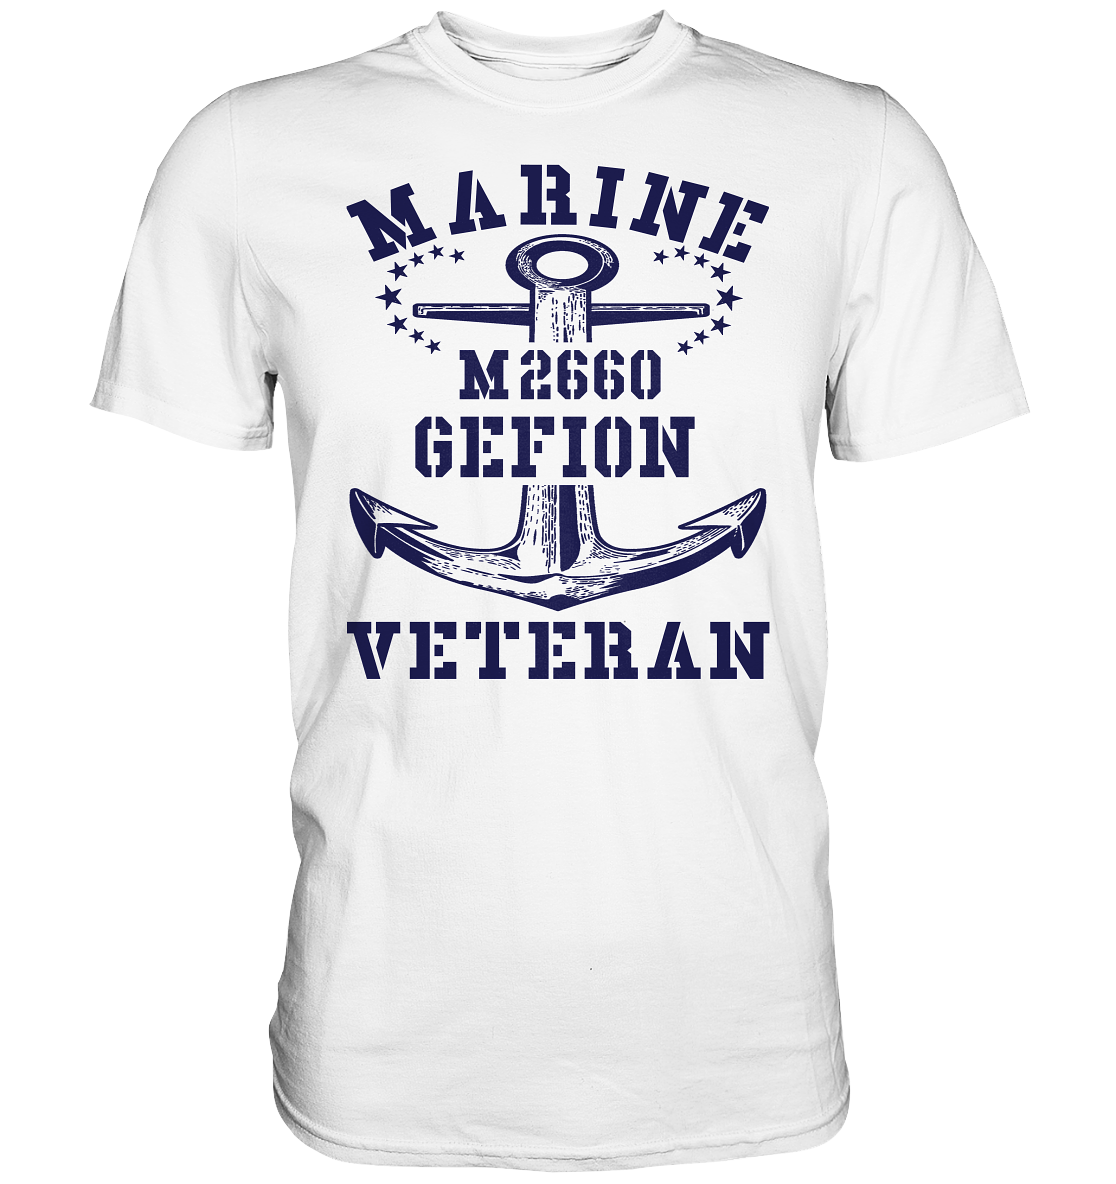 BiMi M2660 GEFION Marine Veteran  - Premium Shirt